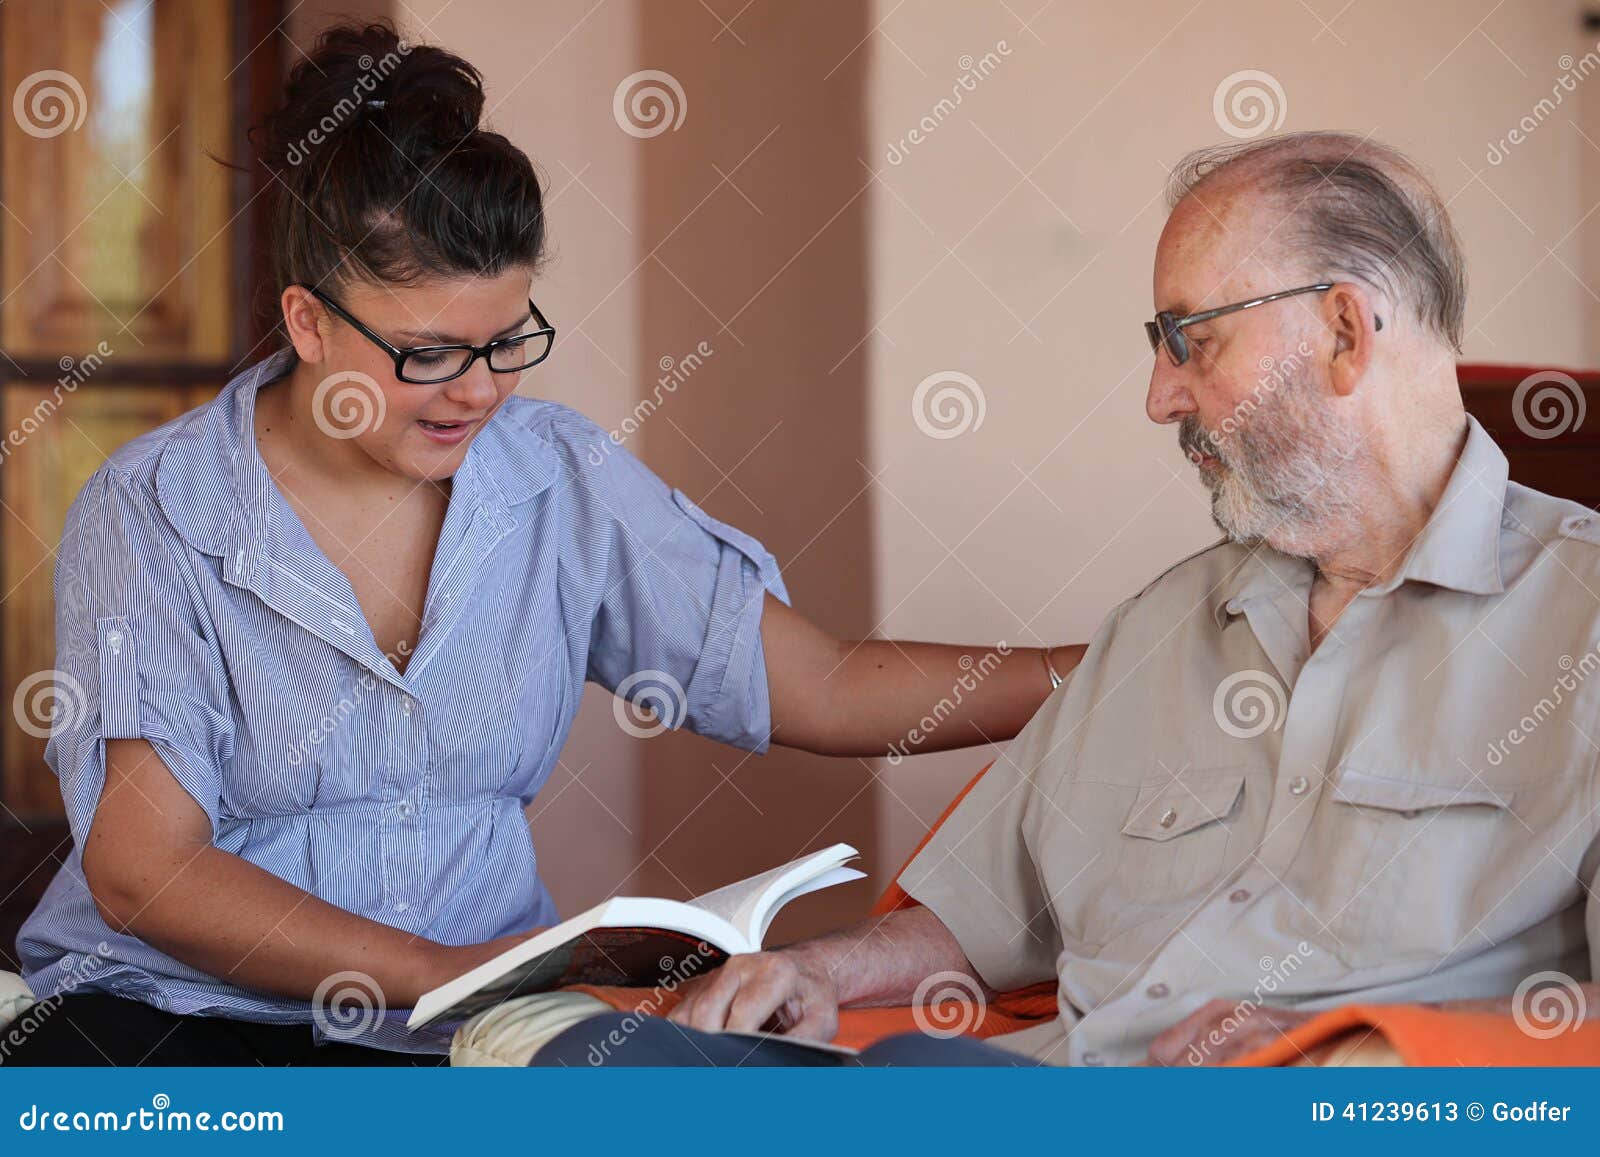 companion or granchild reading to senior or grandfather